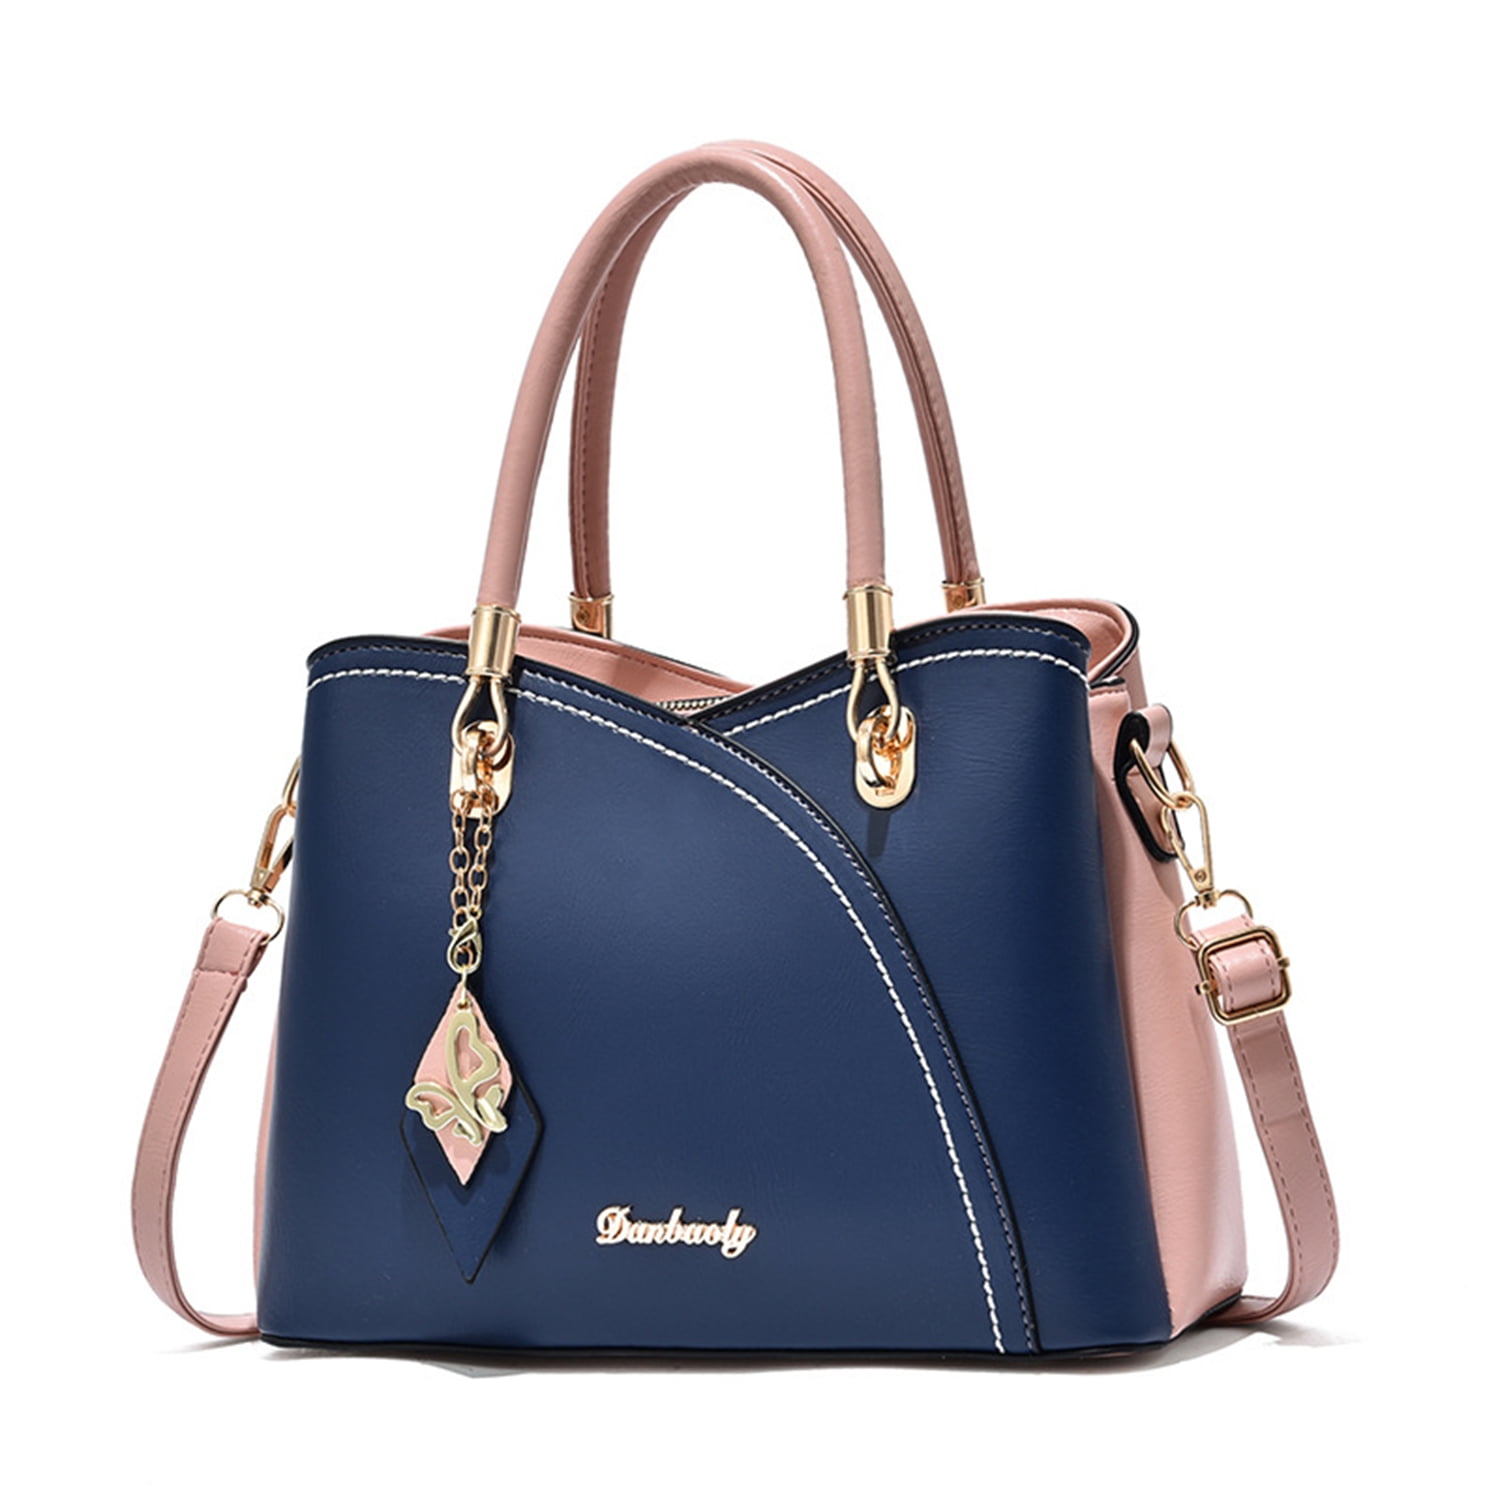 Handbags for Women Fashion Ladies Purses Satchel Shoulder Tote Bags (Sky  Blue-Pink)